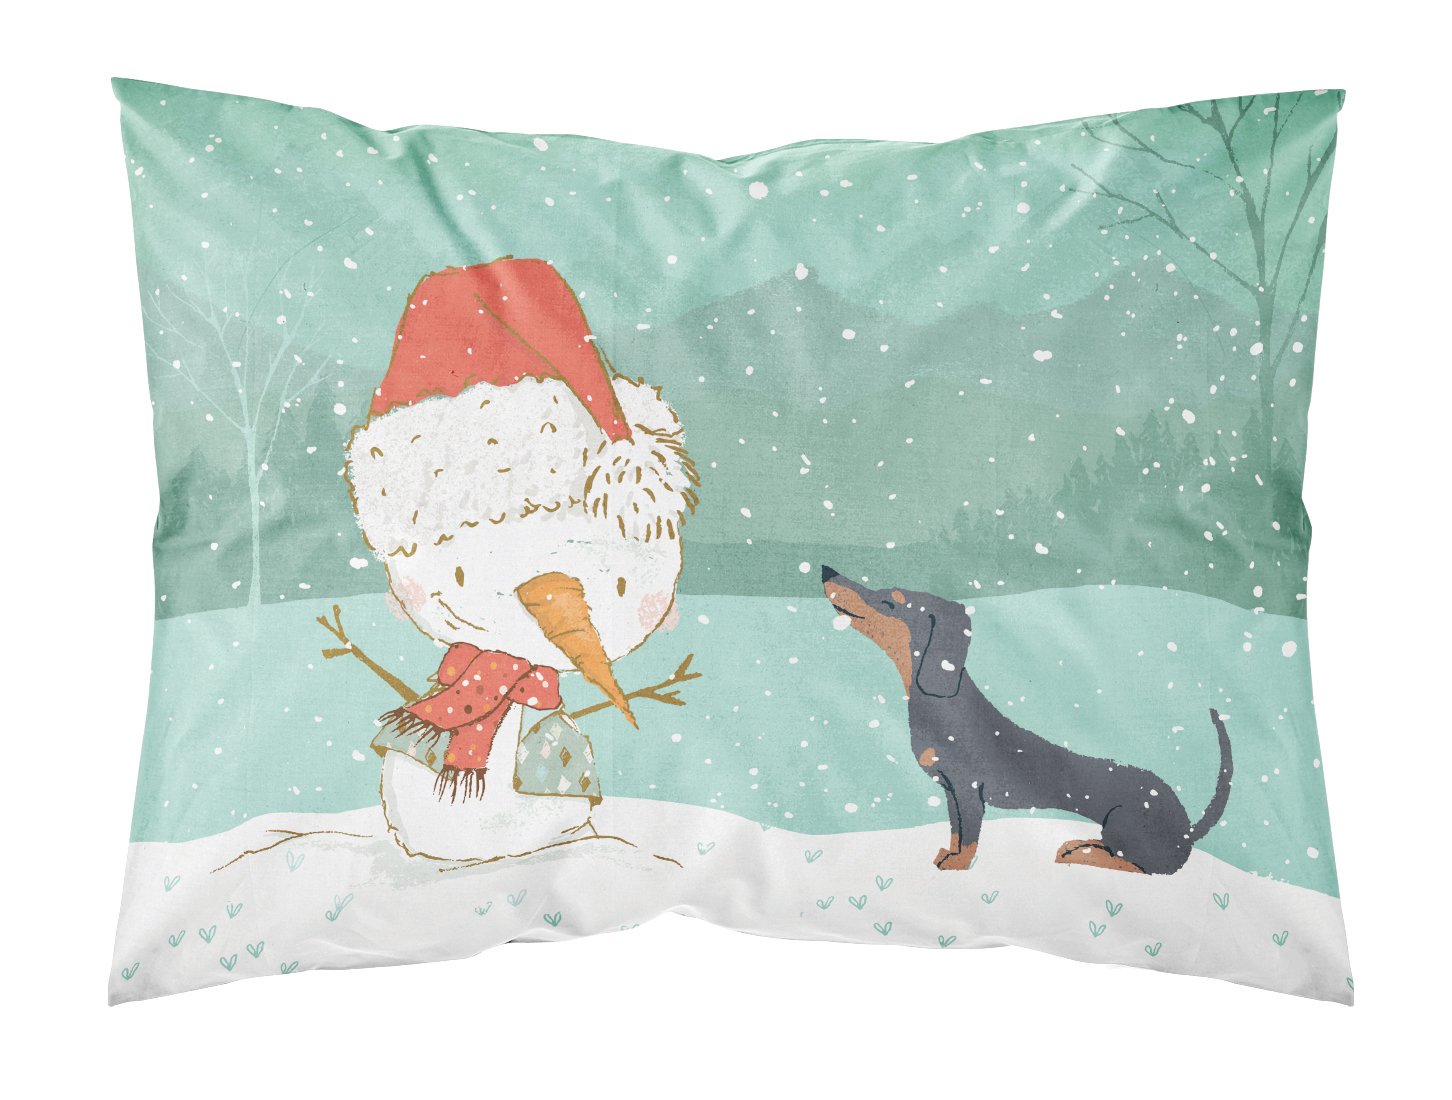 Black Tan Dachshund Snowman Christmas Fabric Standard Pillowcase CK2083PILLOWCASE by Caroline's Treasures